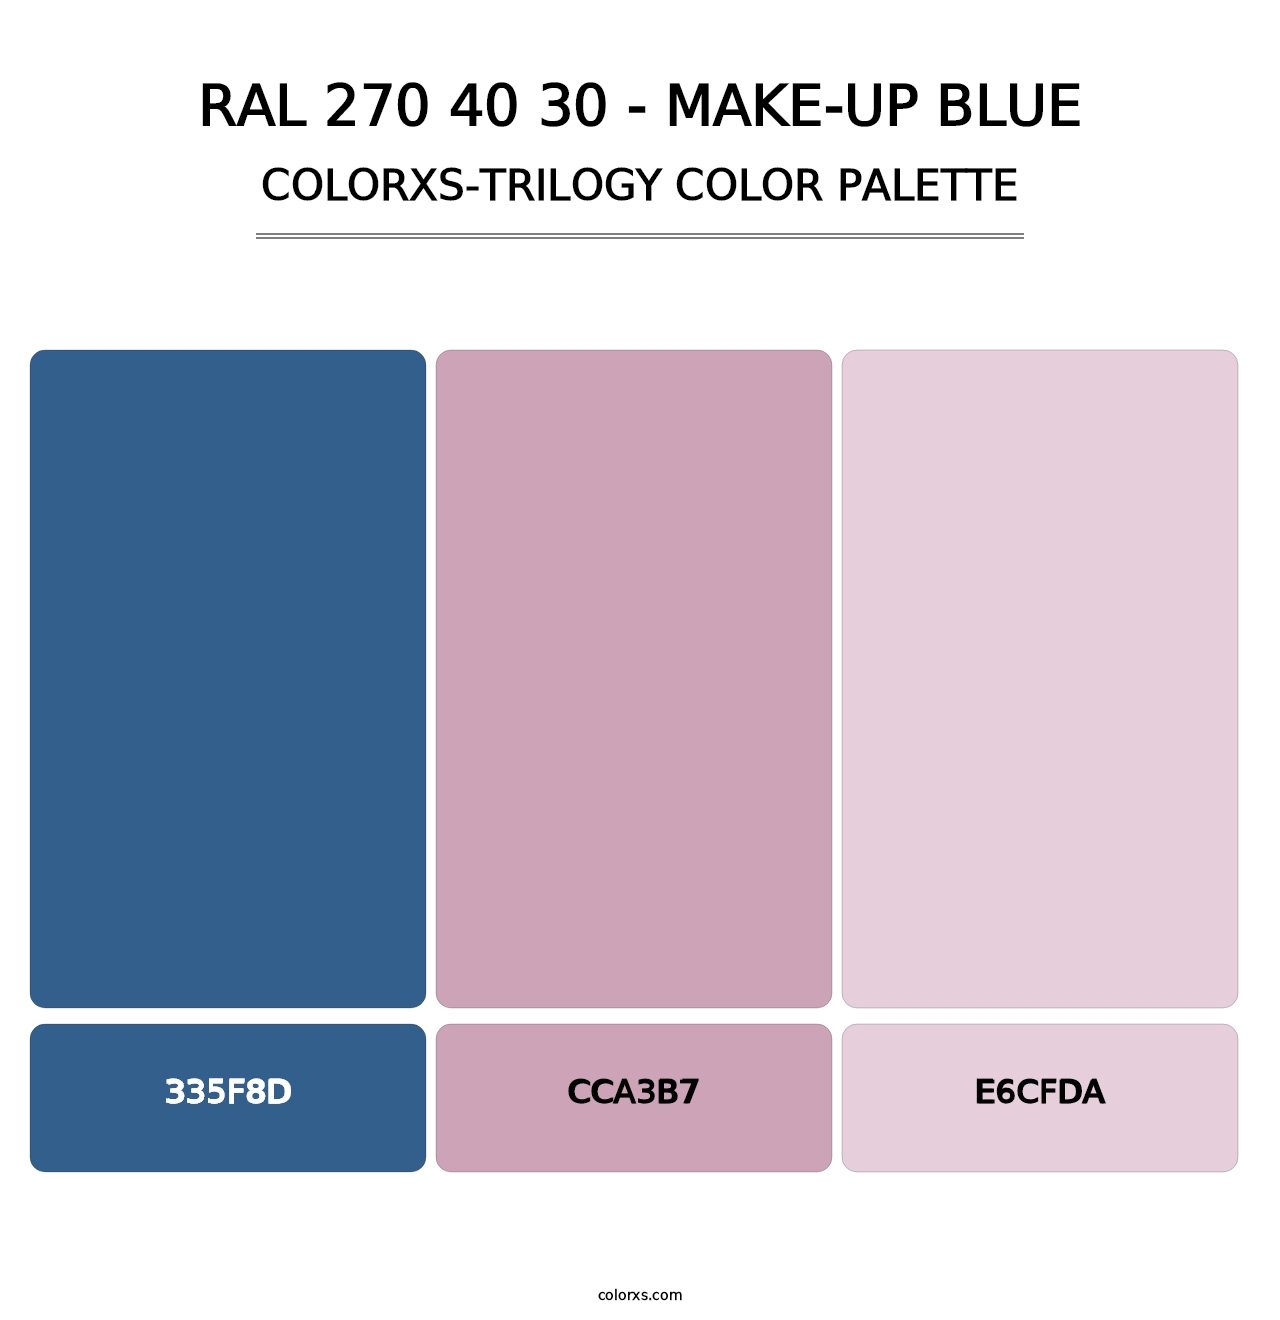 RAL 270 40 30 - Make-Up Blue - Colorxs Trilogy Palette